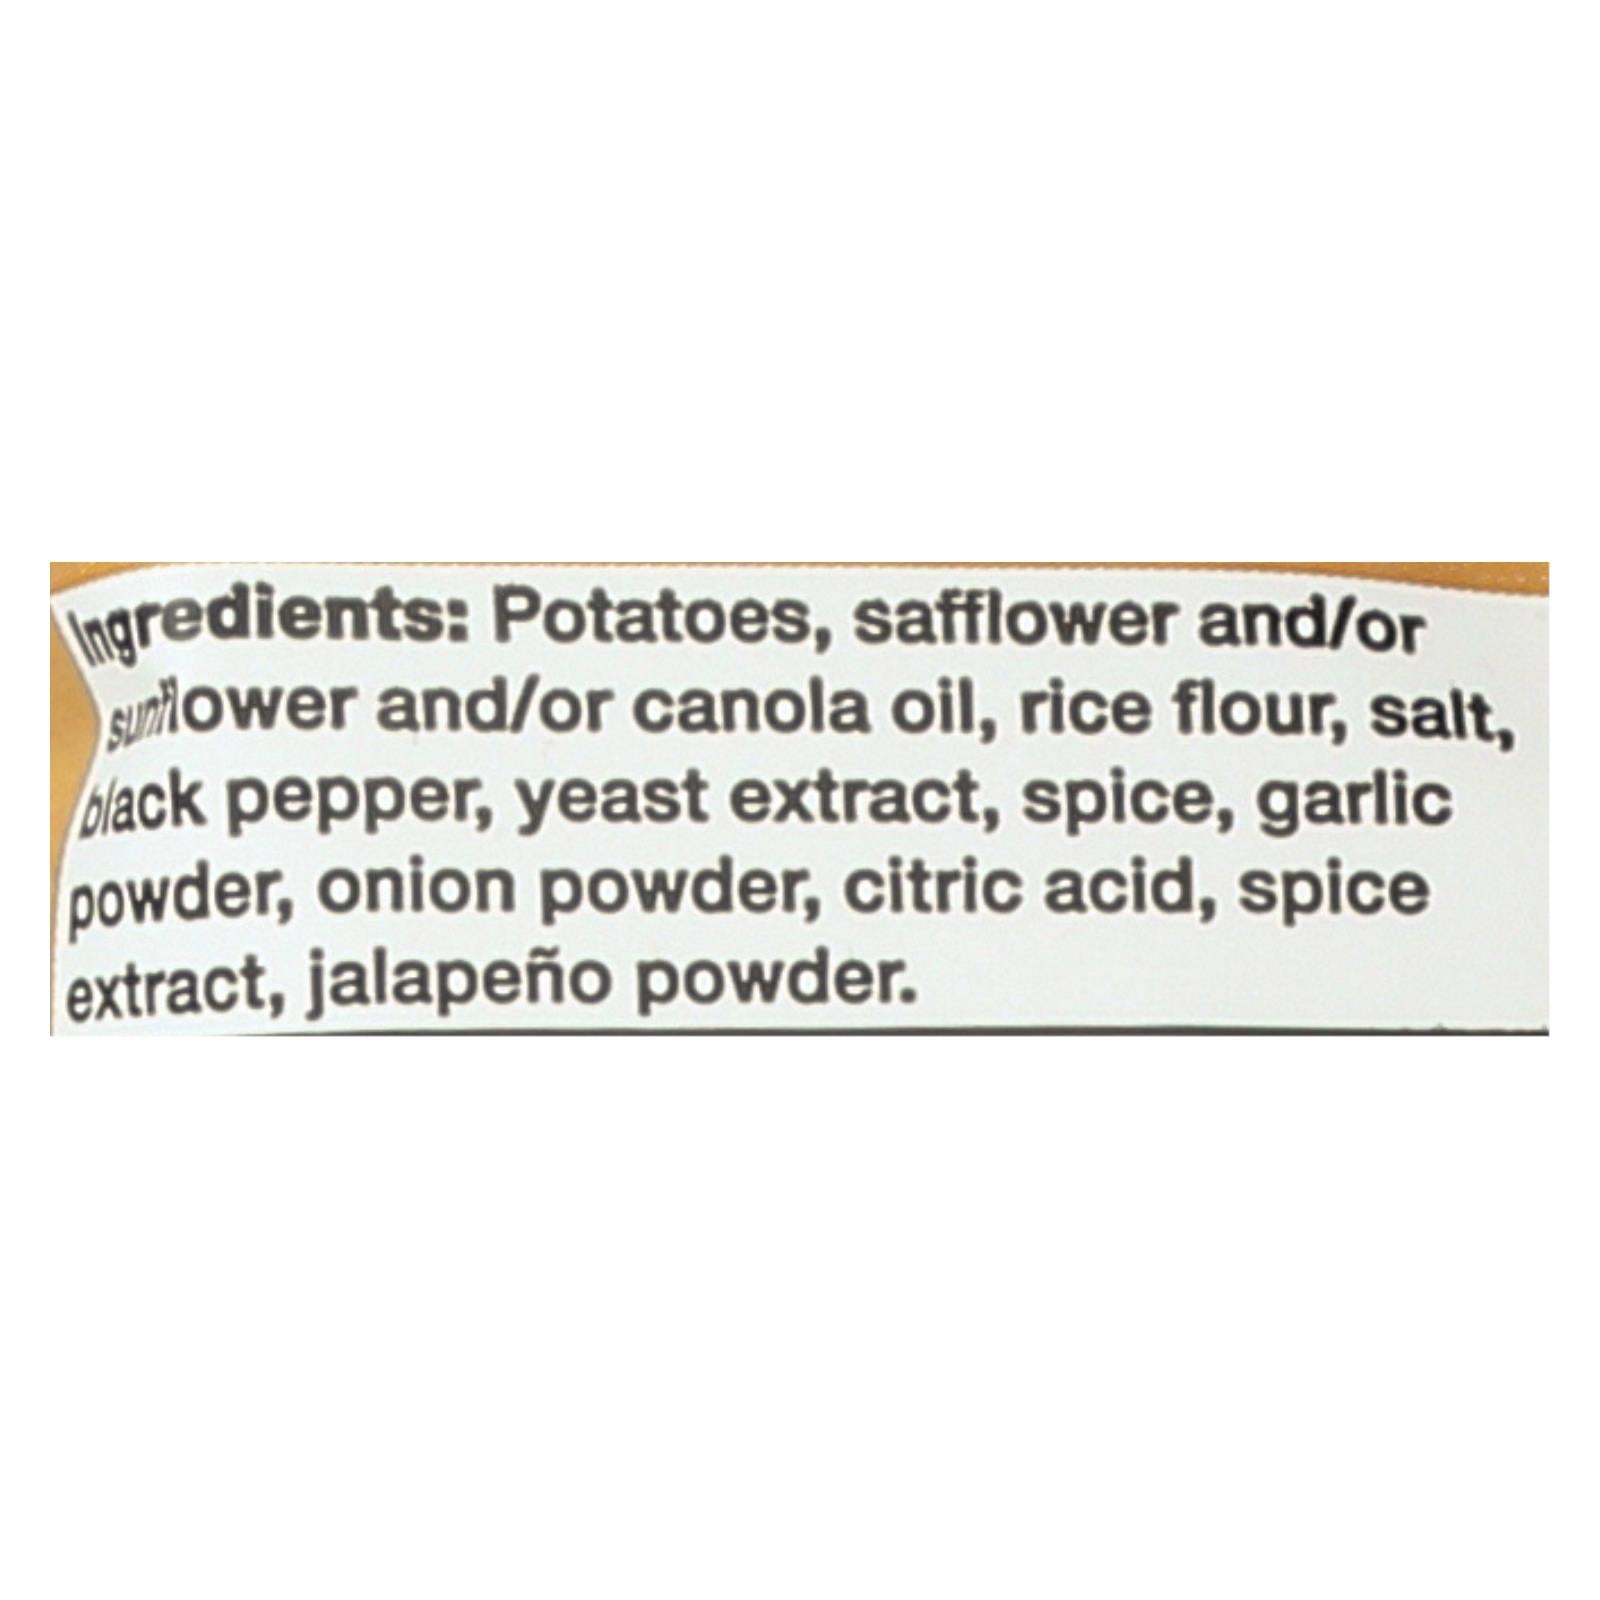 Kettle Brand Potato Chips - Salt And Pepper - Case Of 15 - 5 Oz.